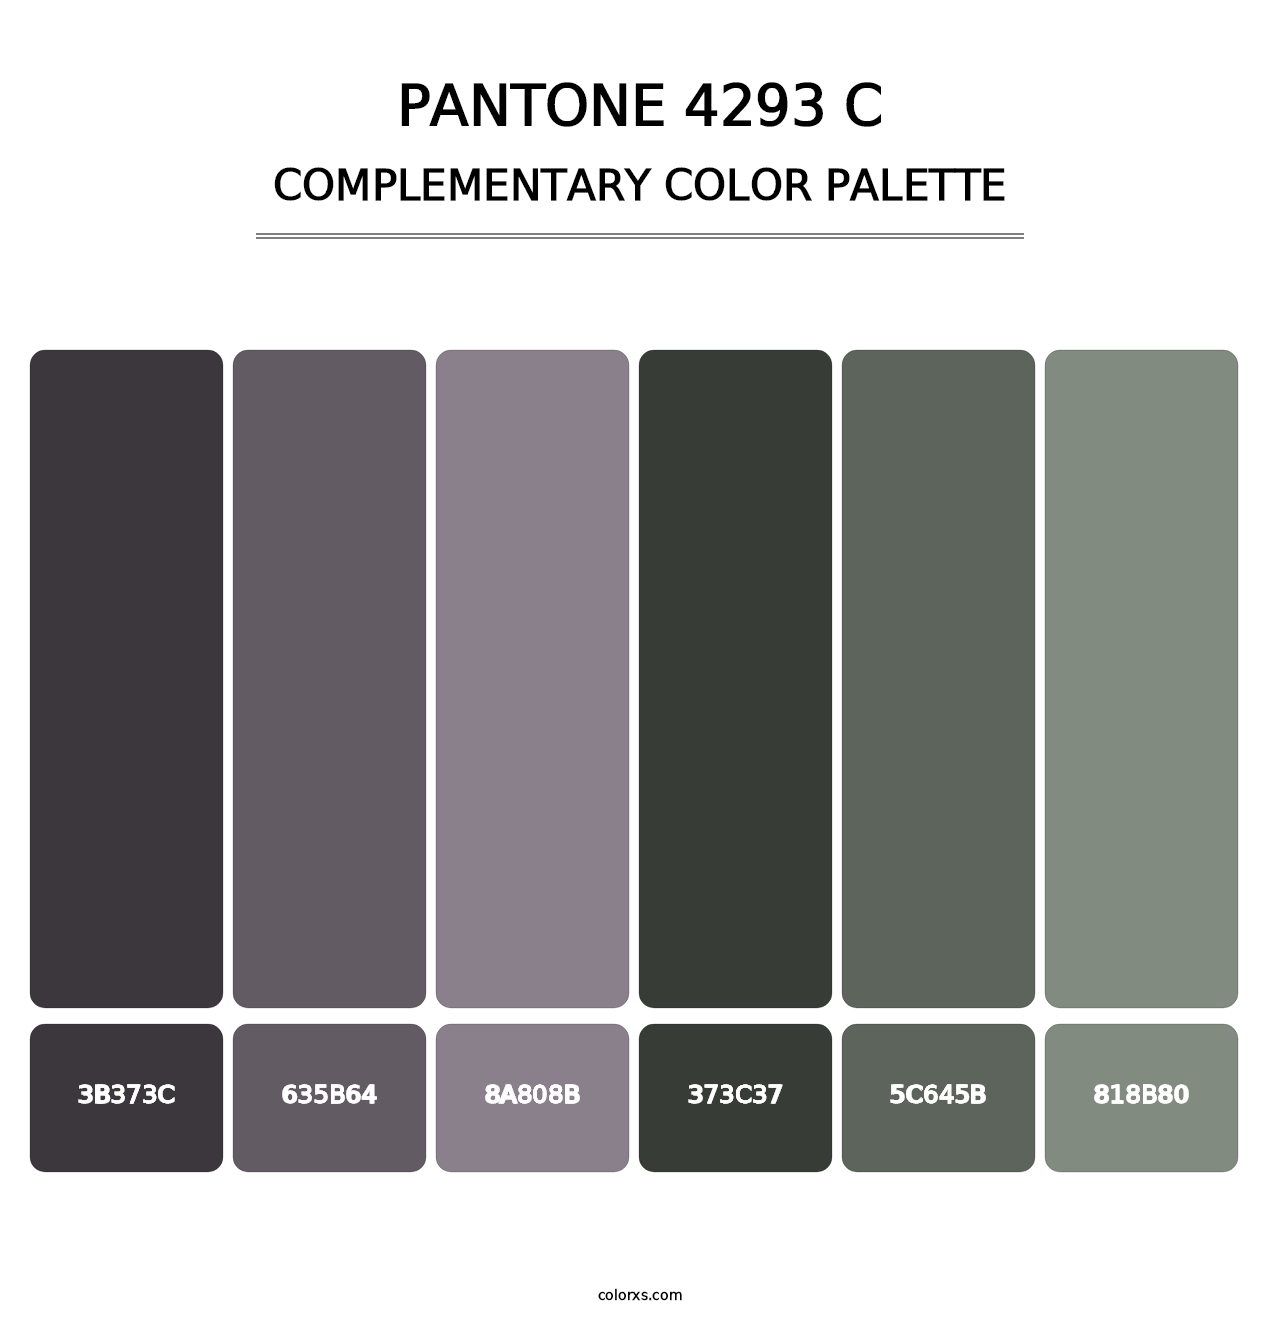 PANTONE 4293 C - Complementary Color Palette